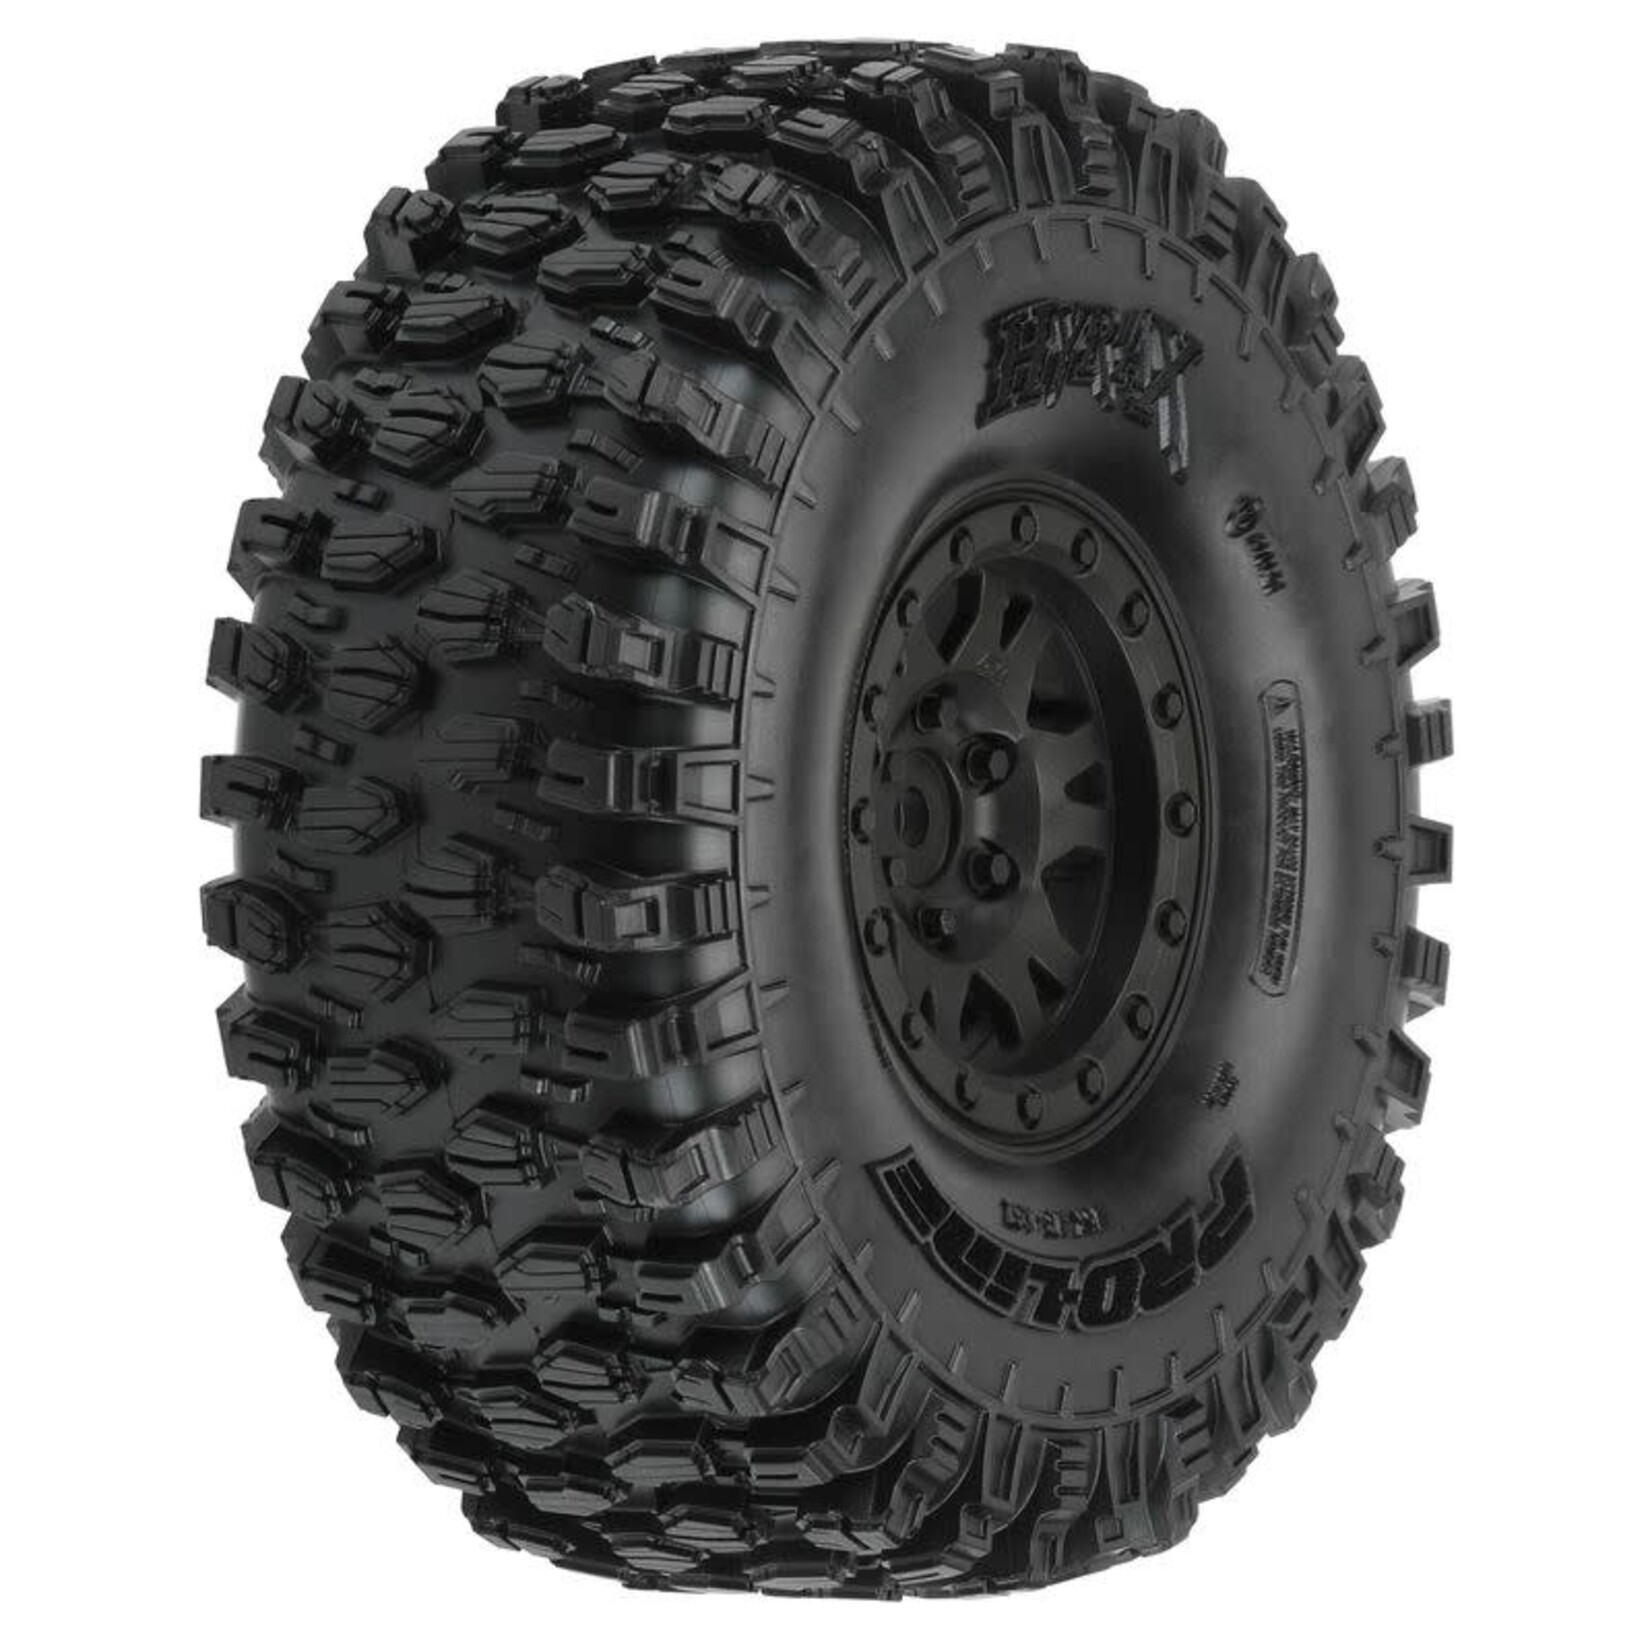 PRO-LINE 1/10 Hyrax G8 F/R 1.9" Crawler Tires Mounted 12mm Black Impulse (2)